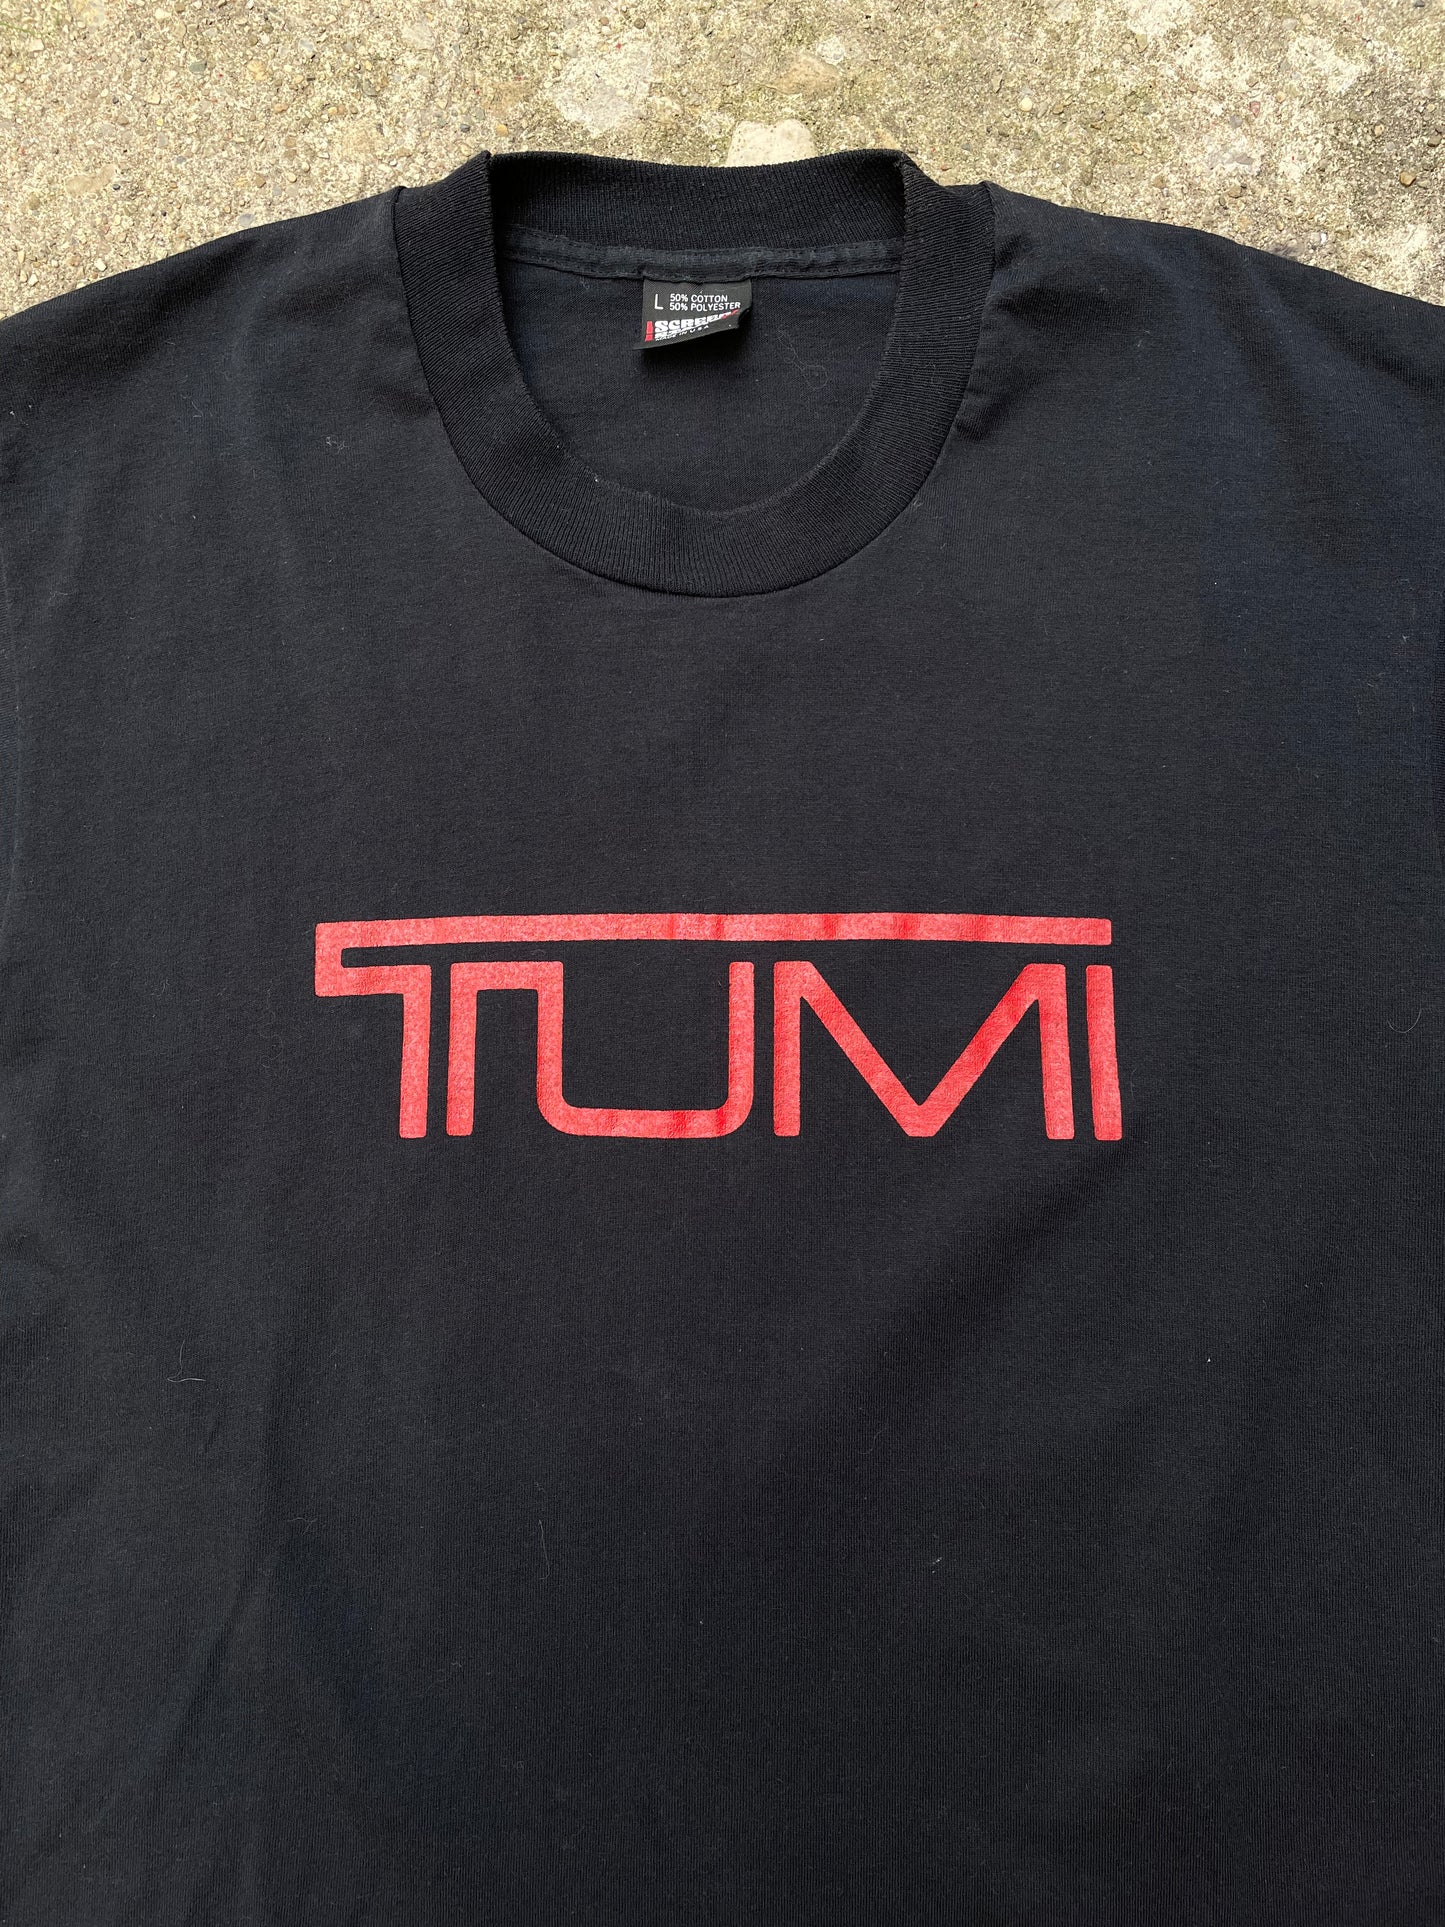 1990's Tumi Graphic Logo T-Shirt - L